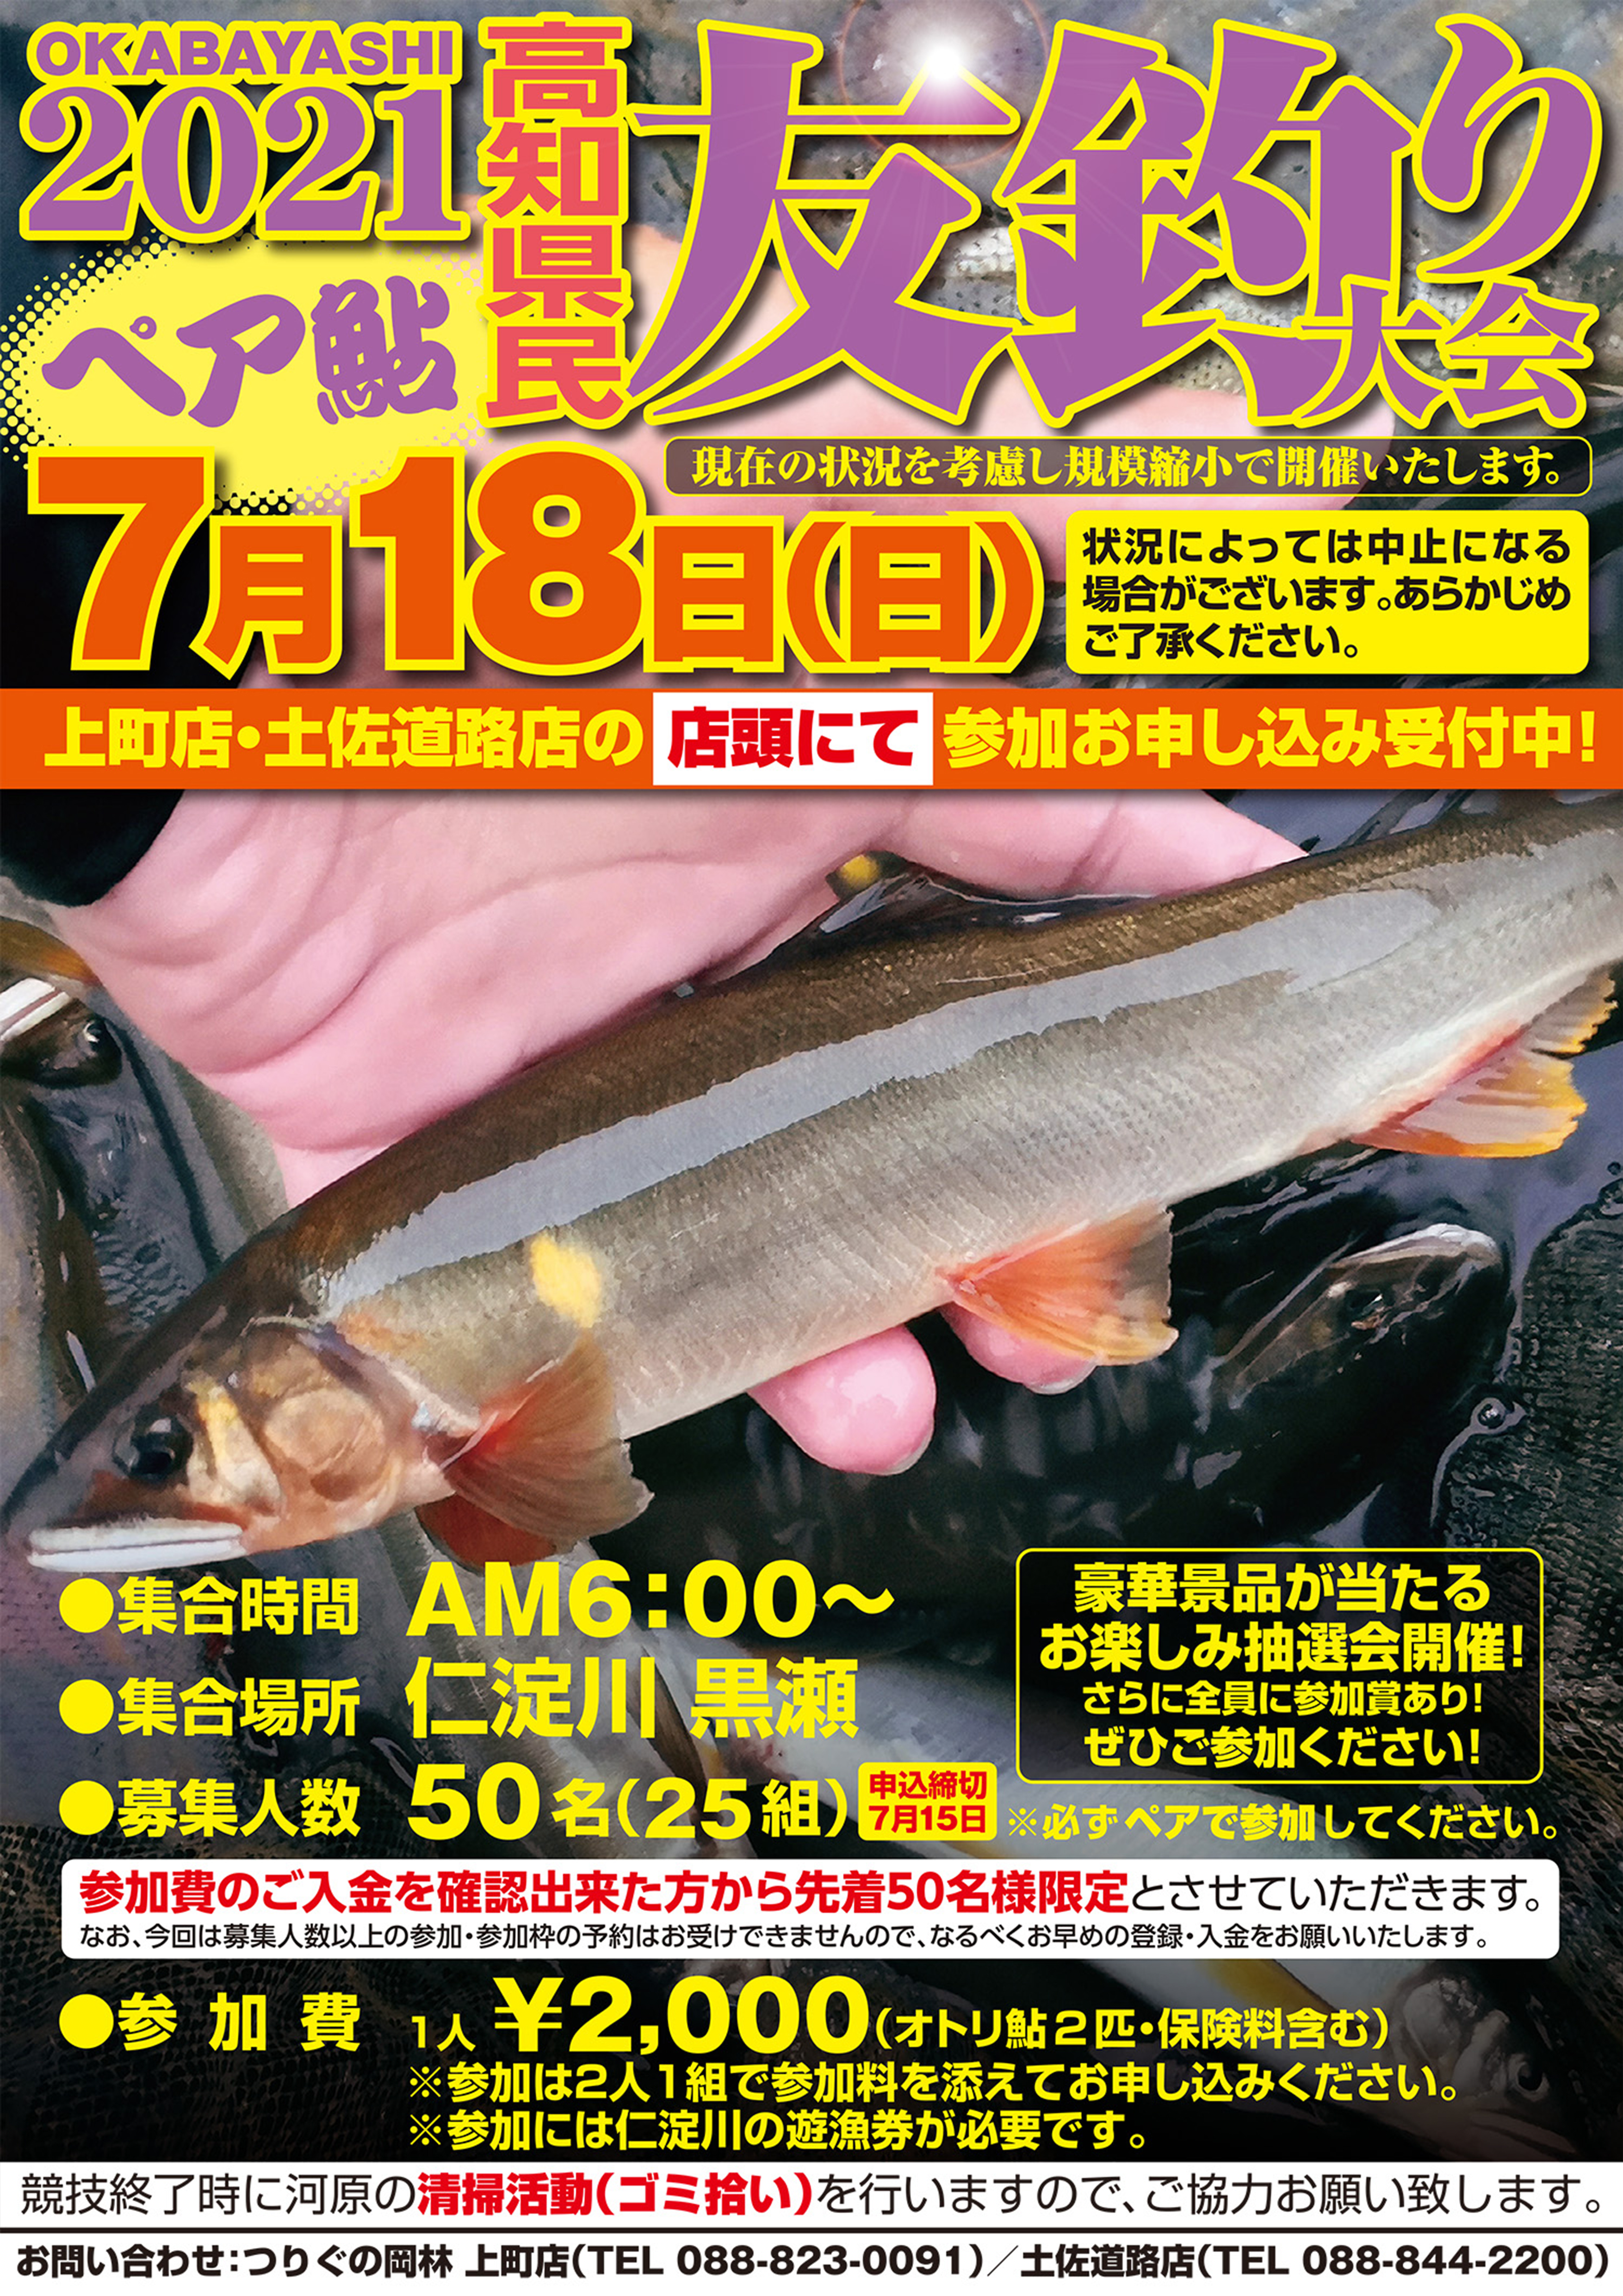 2021年高知県民 ペア鮎共釣り大会